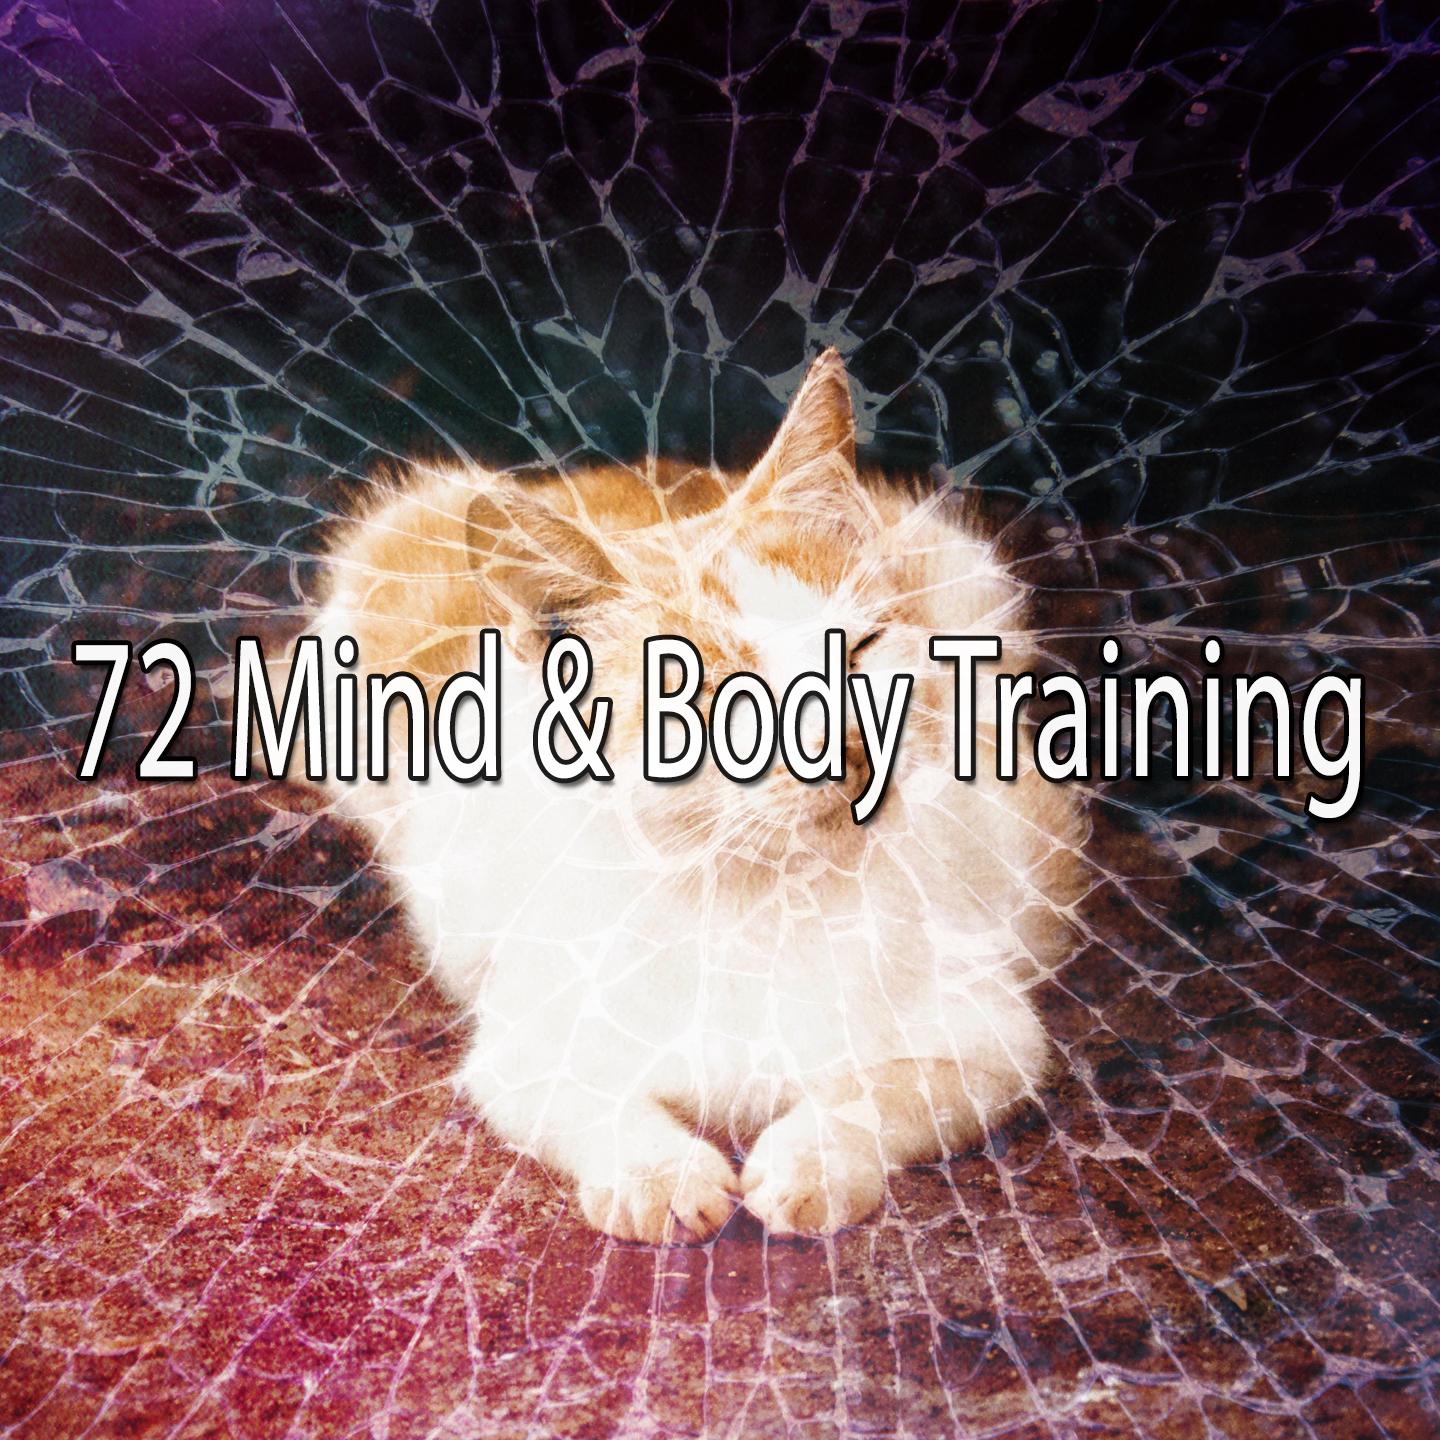 72 Mind & Body Training